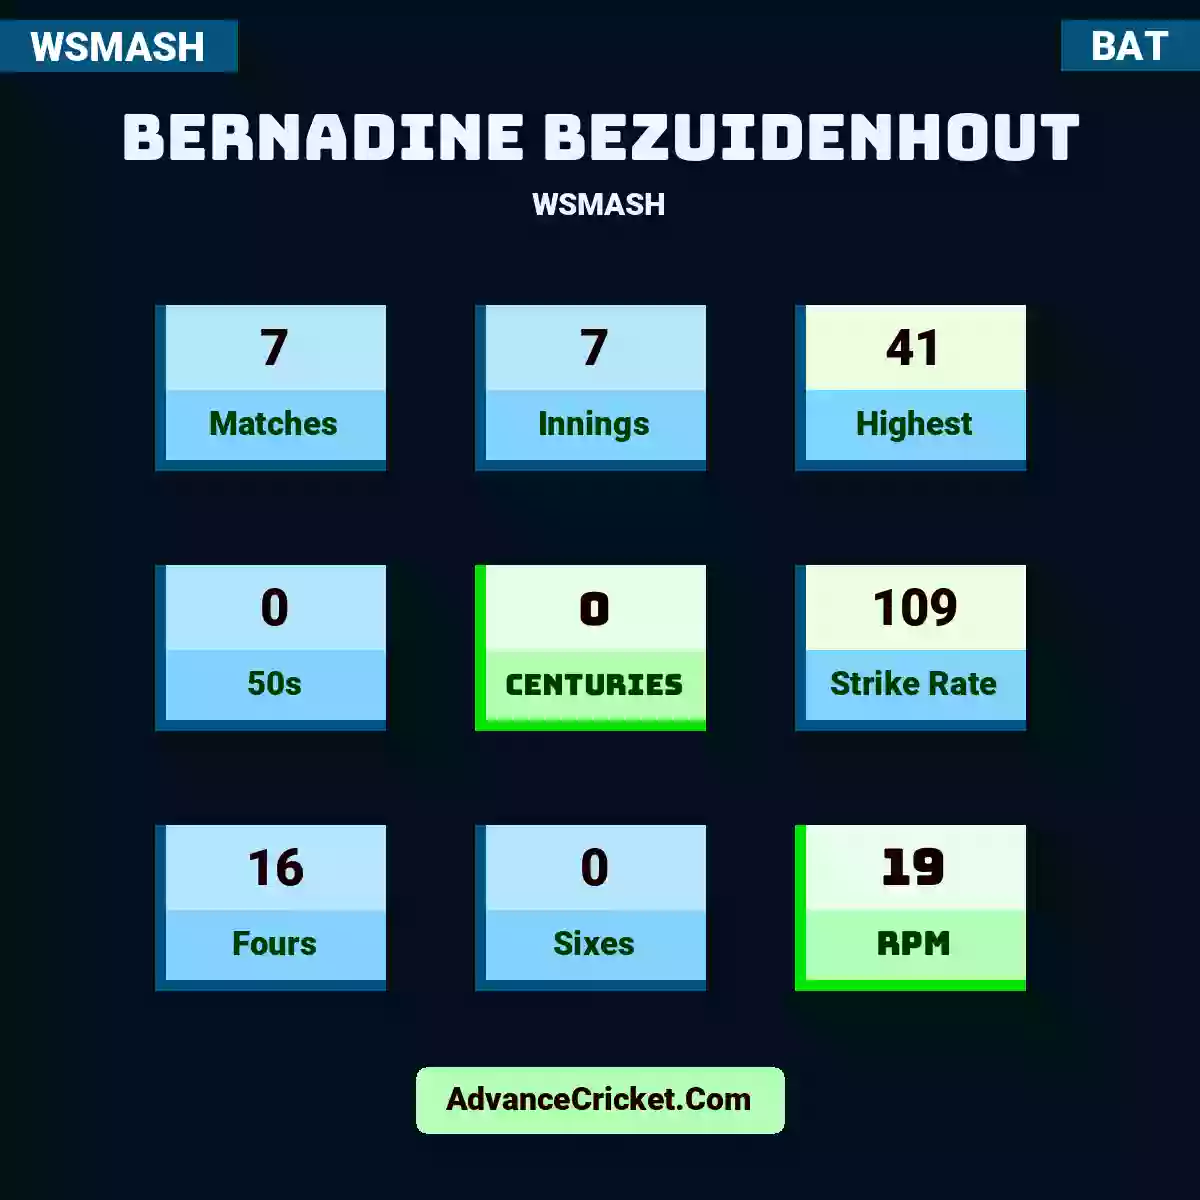 Bernadine Bezuidenhout WSMASH , Bernadine Bezuidenhout played 7 matches, scored 41 runs as highest, 0 half-centuries, and 0 centuries, with a strike rate of 109. B.Bezuidenhout hit 16 fours and 0 sixes, with an RPM of 19.